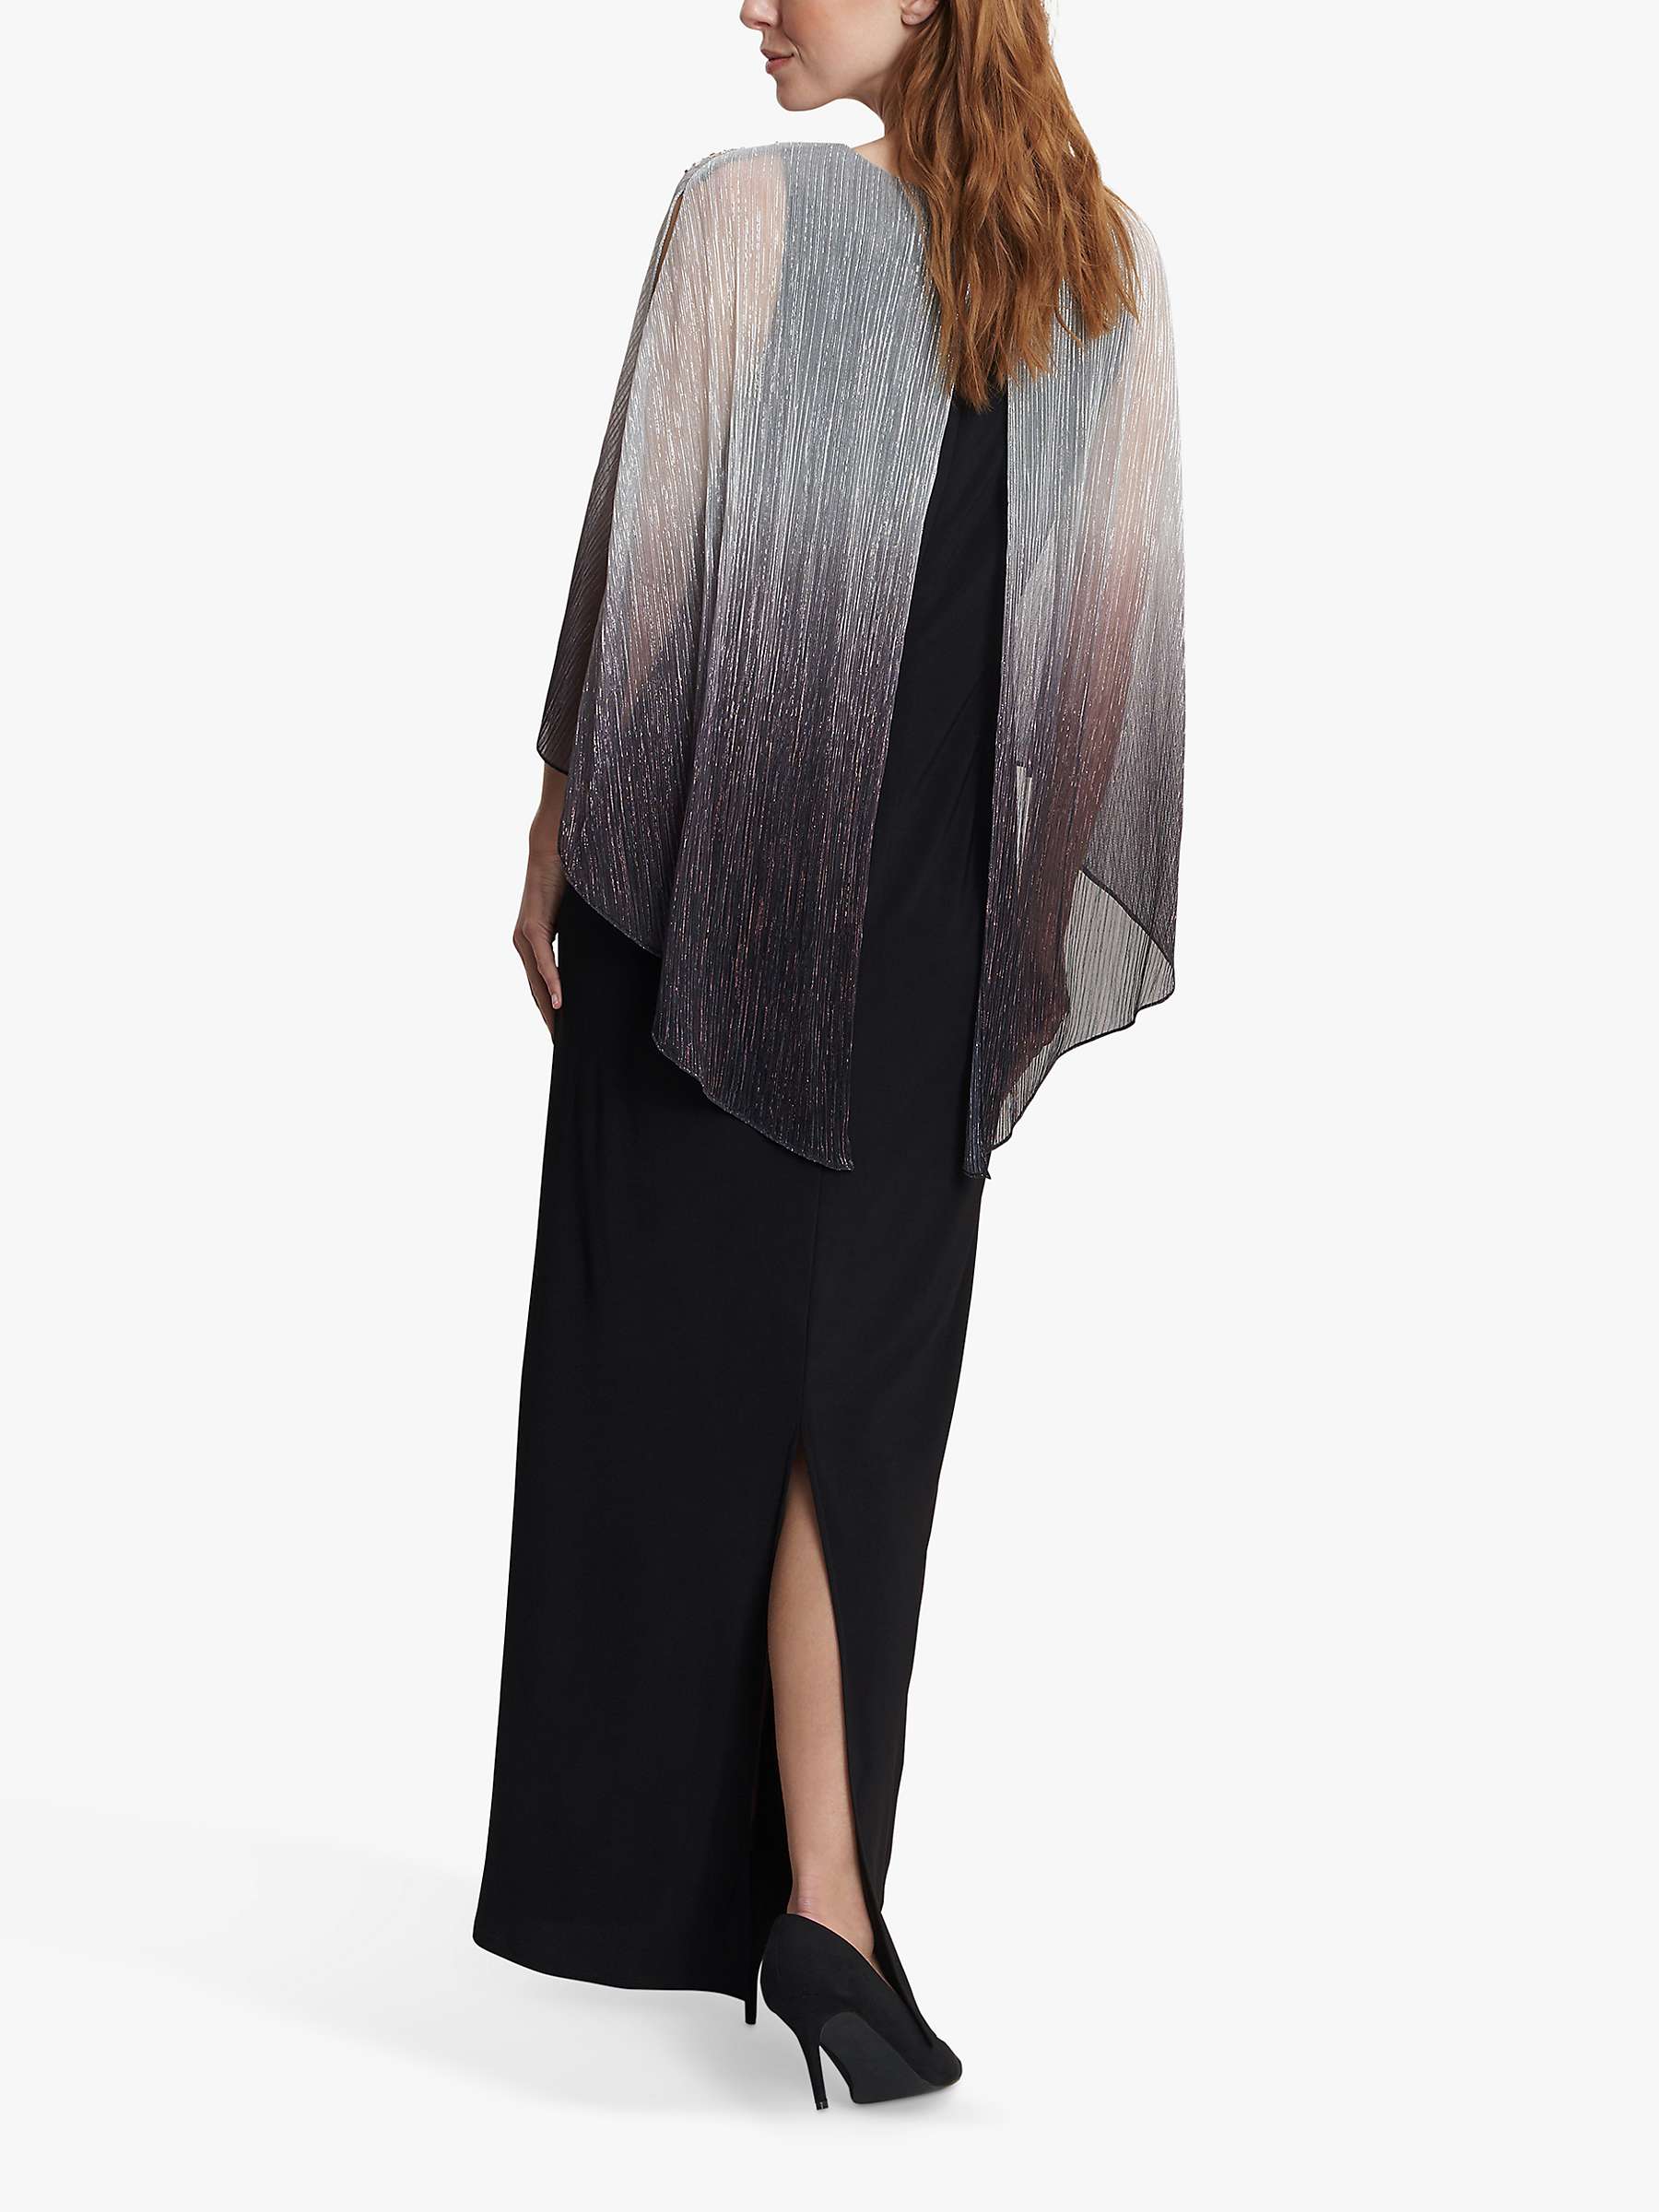 Buy Gina Bacconi Avigail Caped Maxi Dress, Black/Silver Online at johnlewis.com